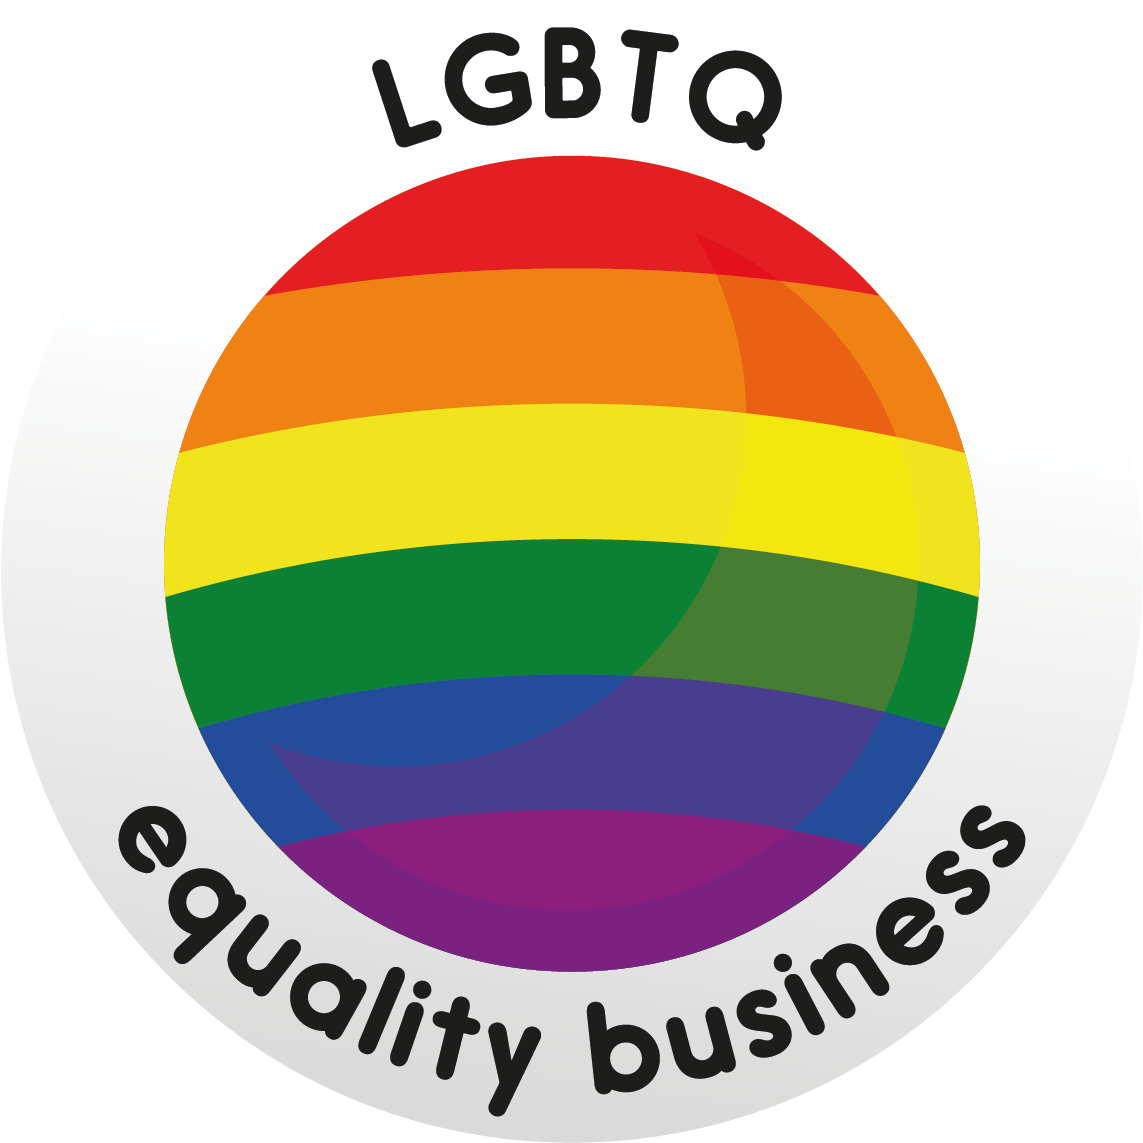 L G B T Q Equality Business Badge PNG